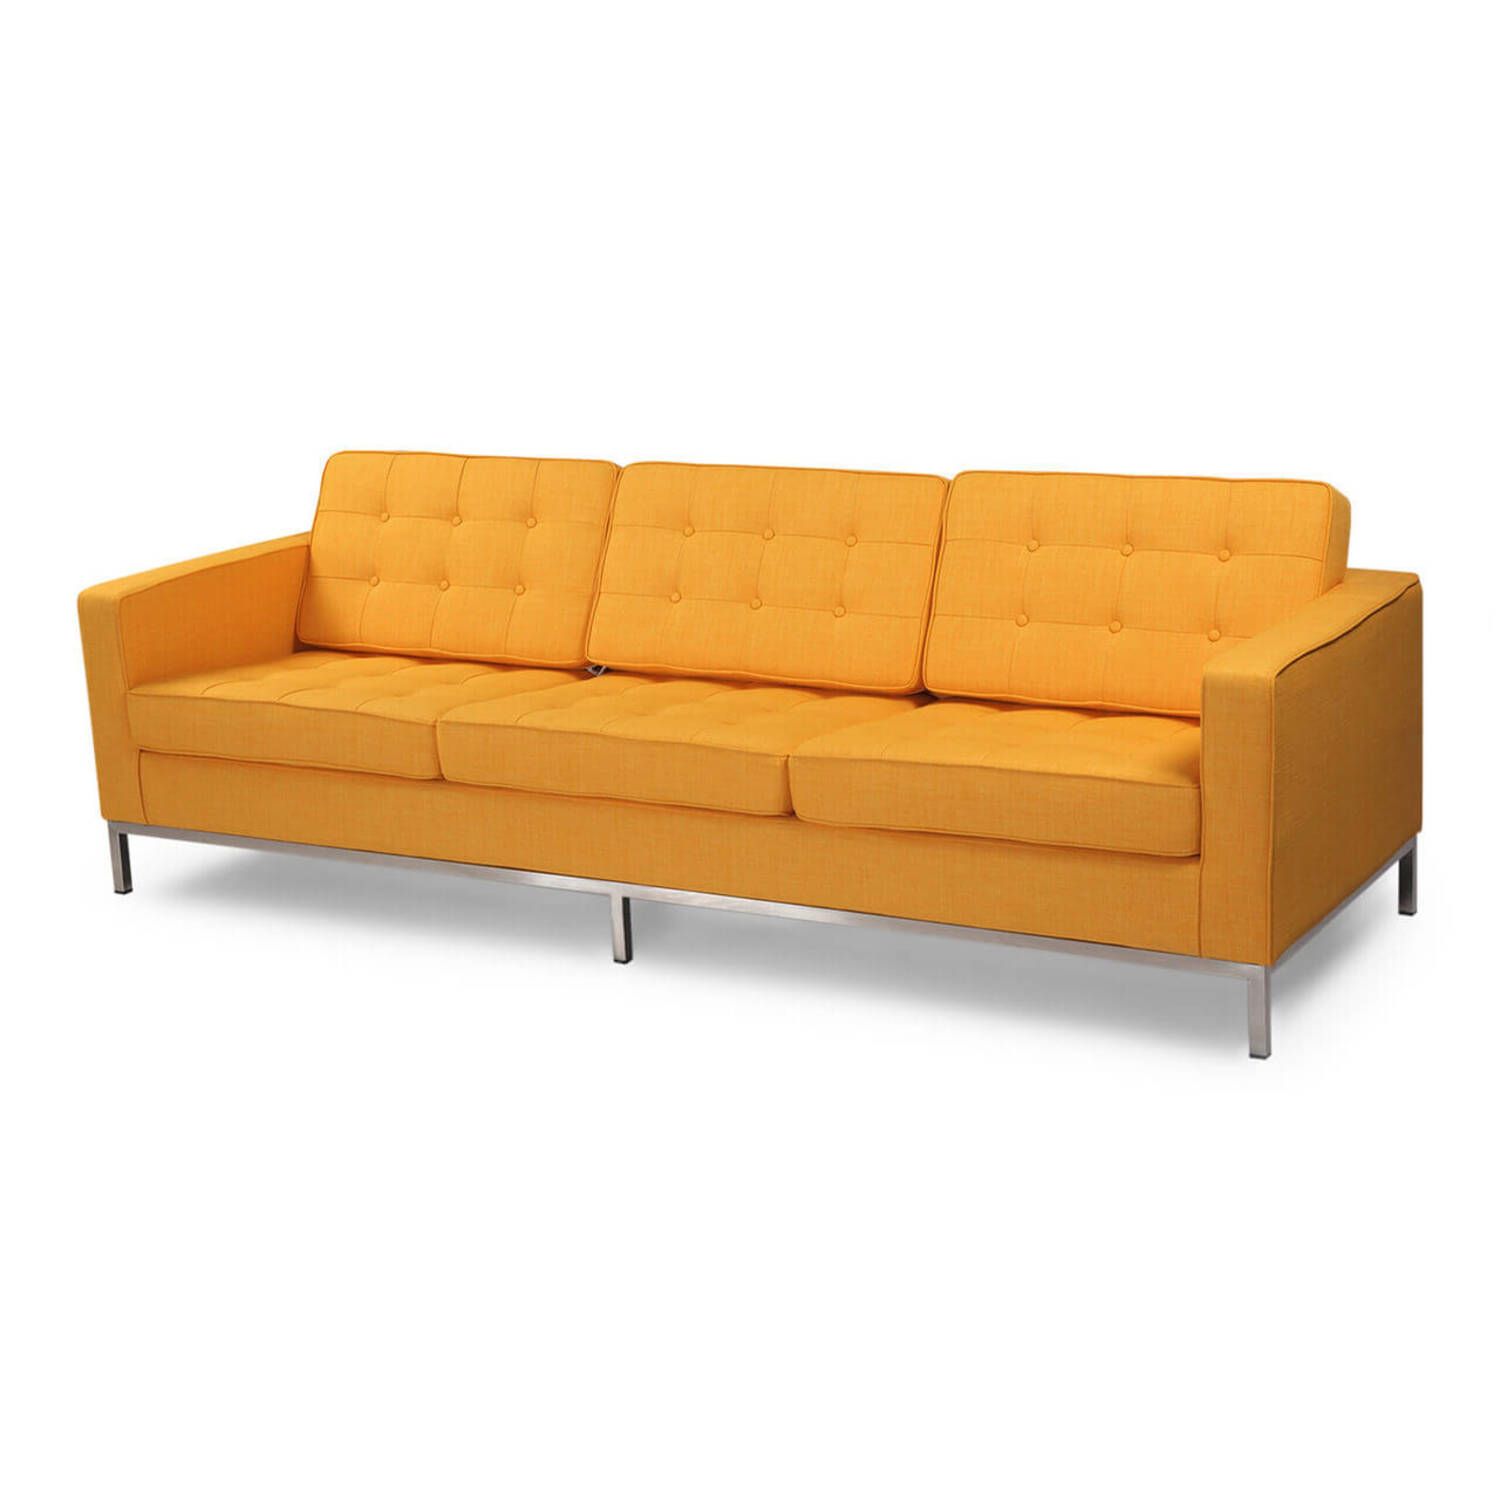 Желтый трехместный диван Florence